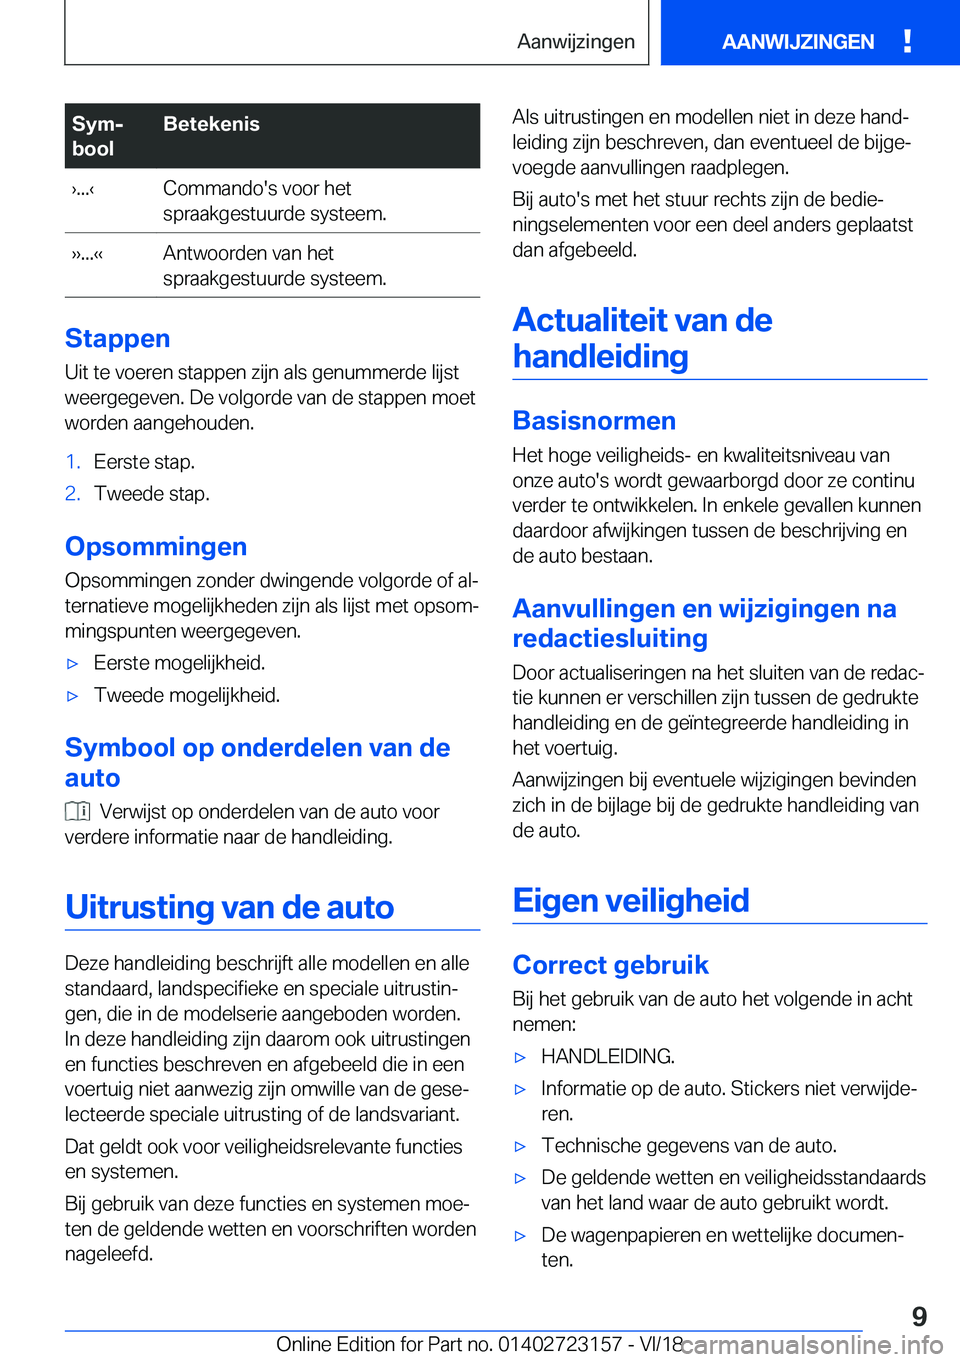 BMW 4 SERIES COUPE 2019  Instructieboekjes (in Dutch) �S�y�mj
�b�o�o�l�B�e�t�e�k�e�n�i�s